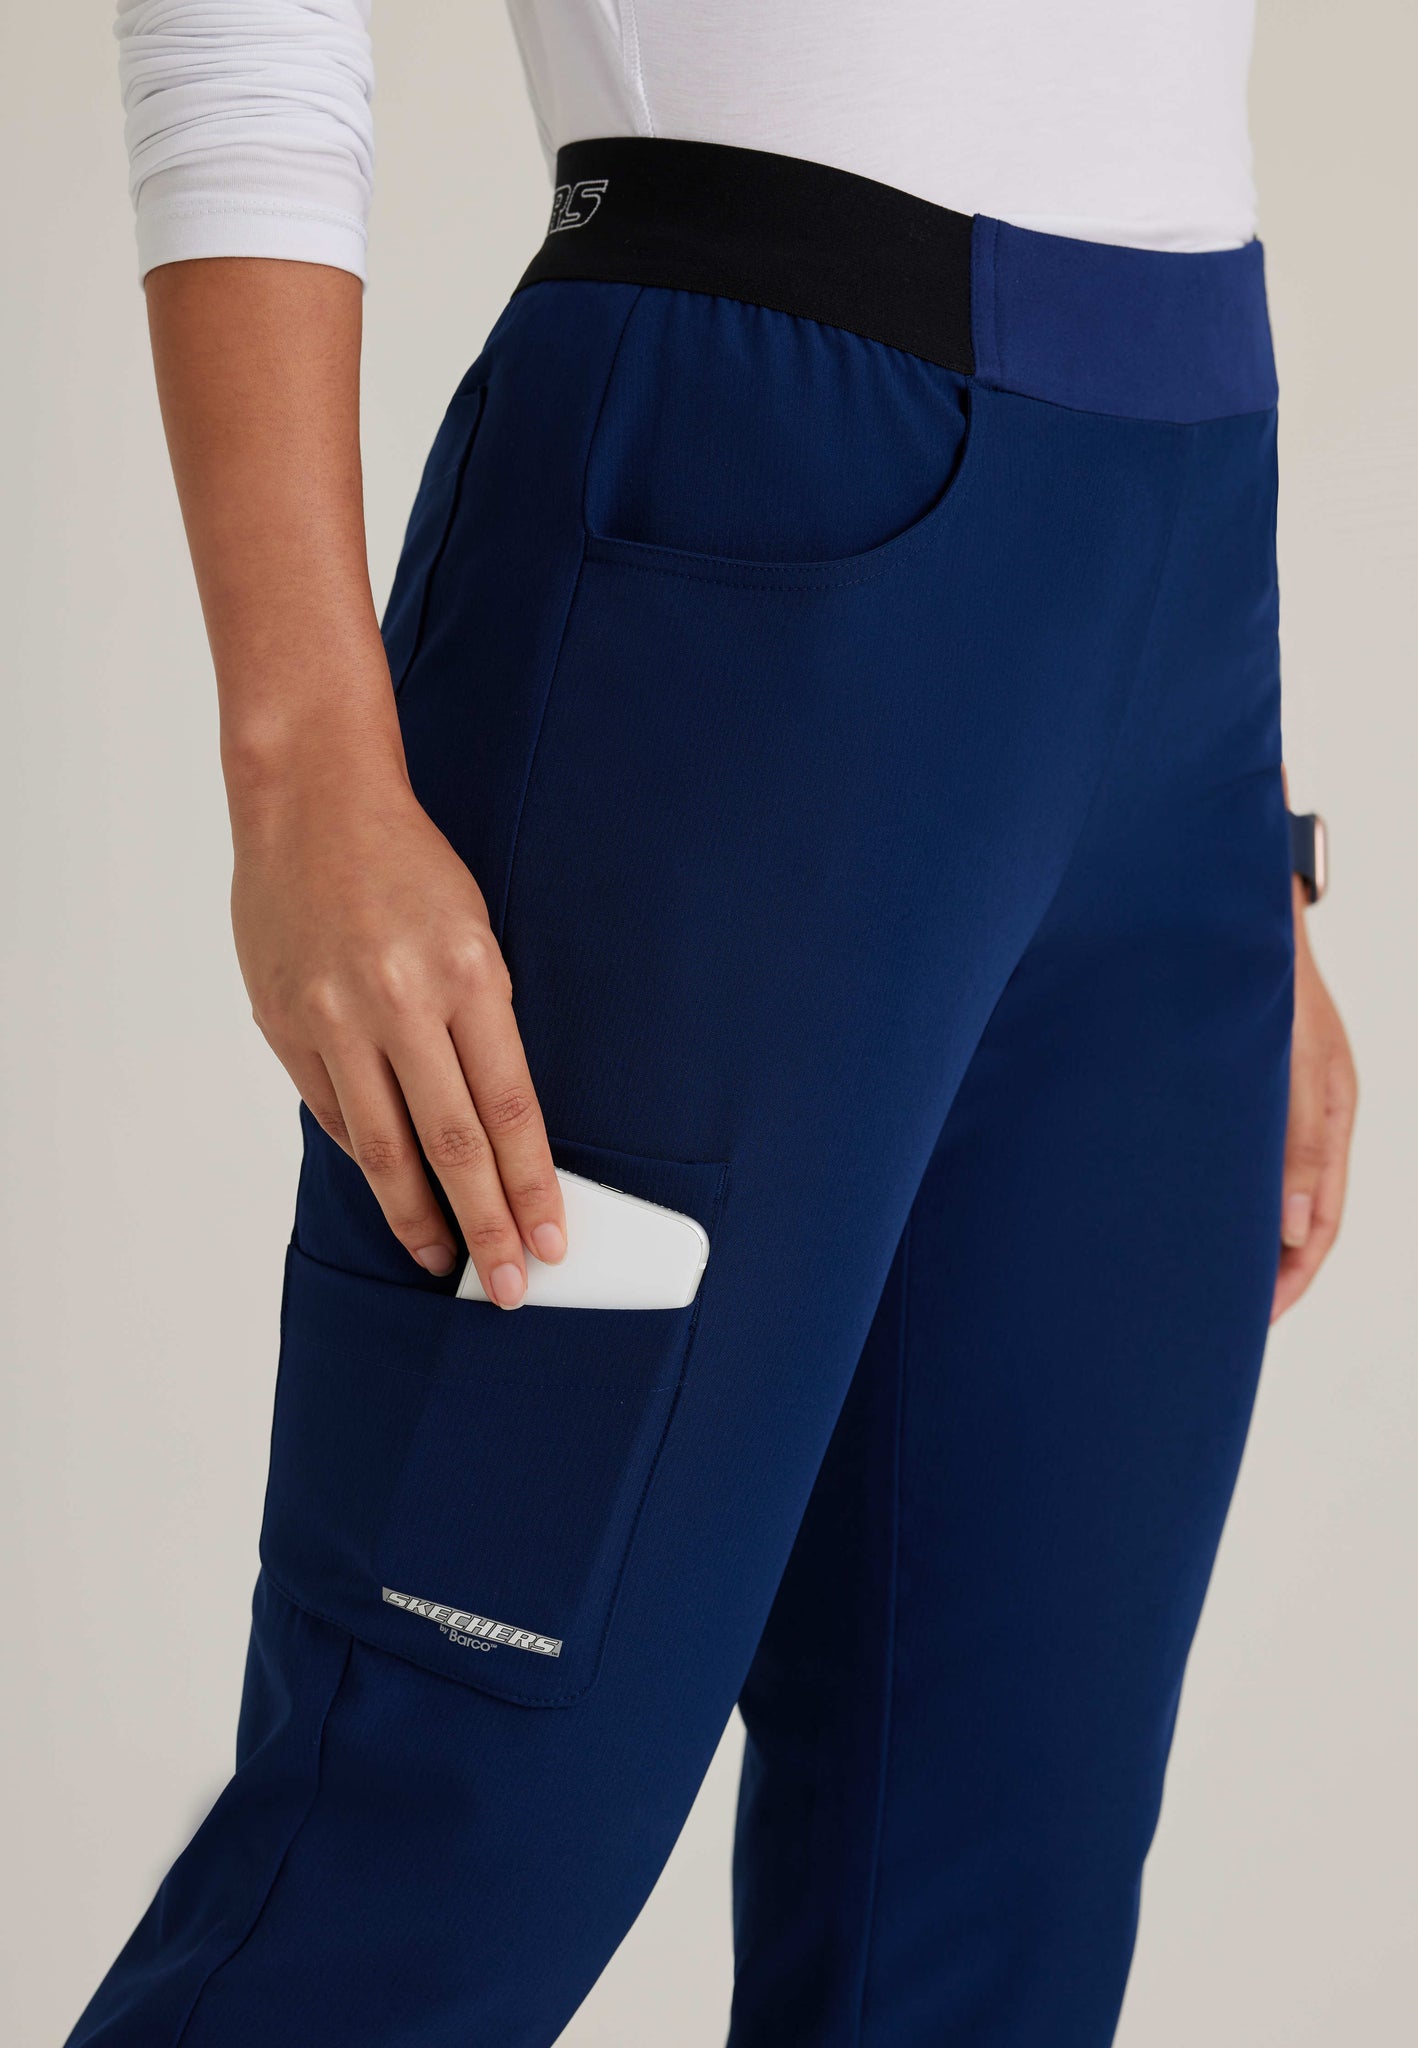 SKECHERS SweatPants : Buy SKECHERS The Go Walk Pant Motion Online | Nykaa  Fashion